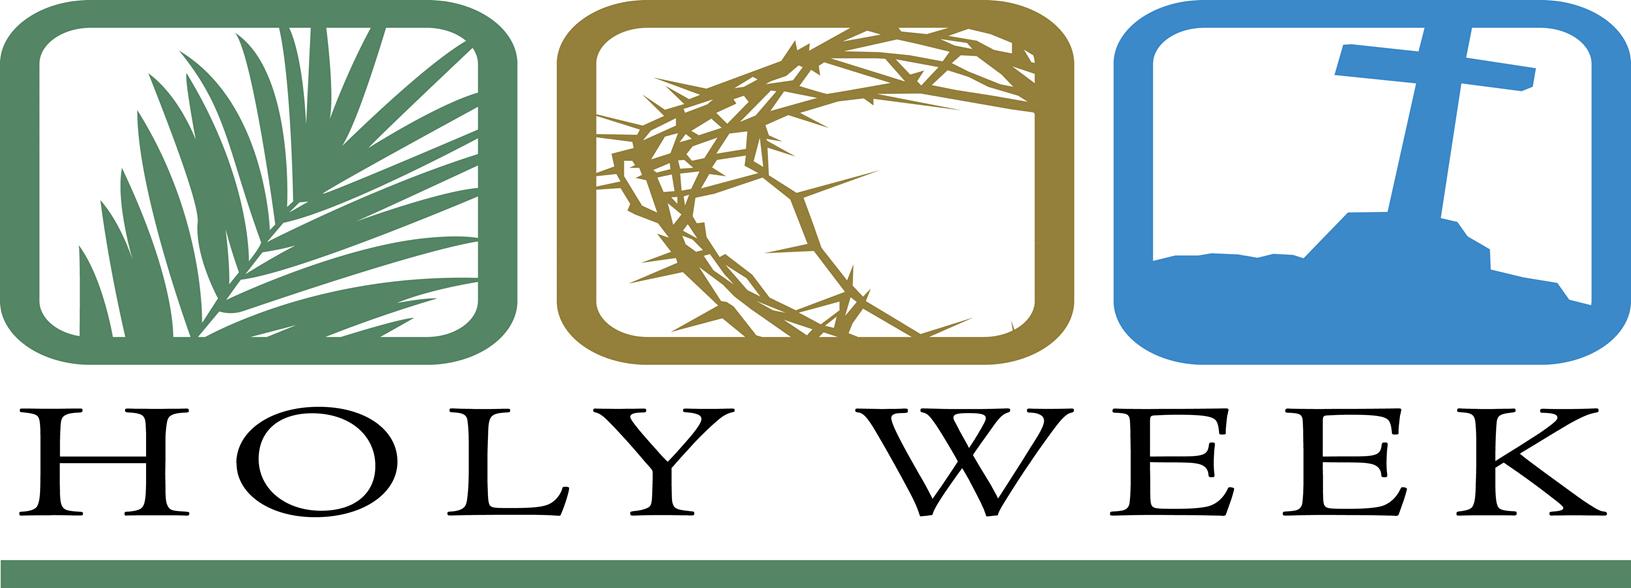 Holy Week Symbols Banner Image